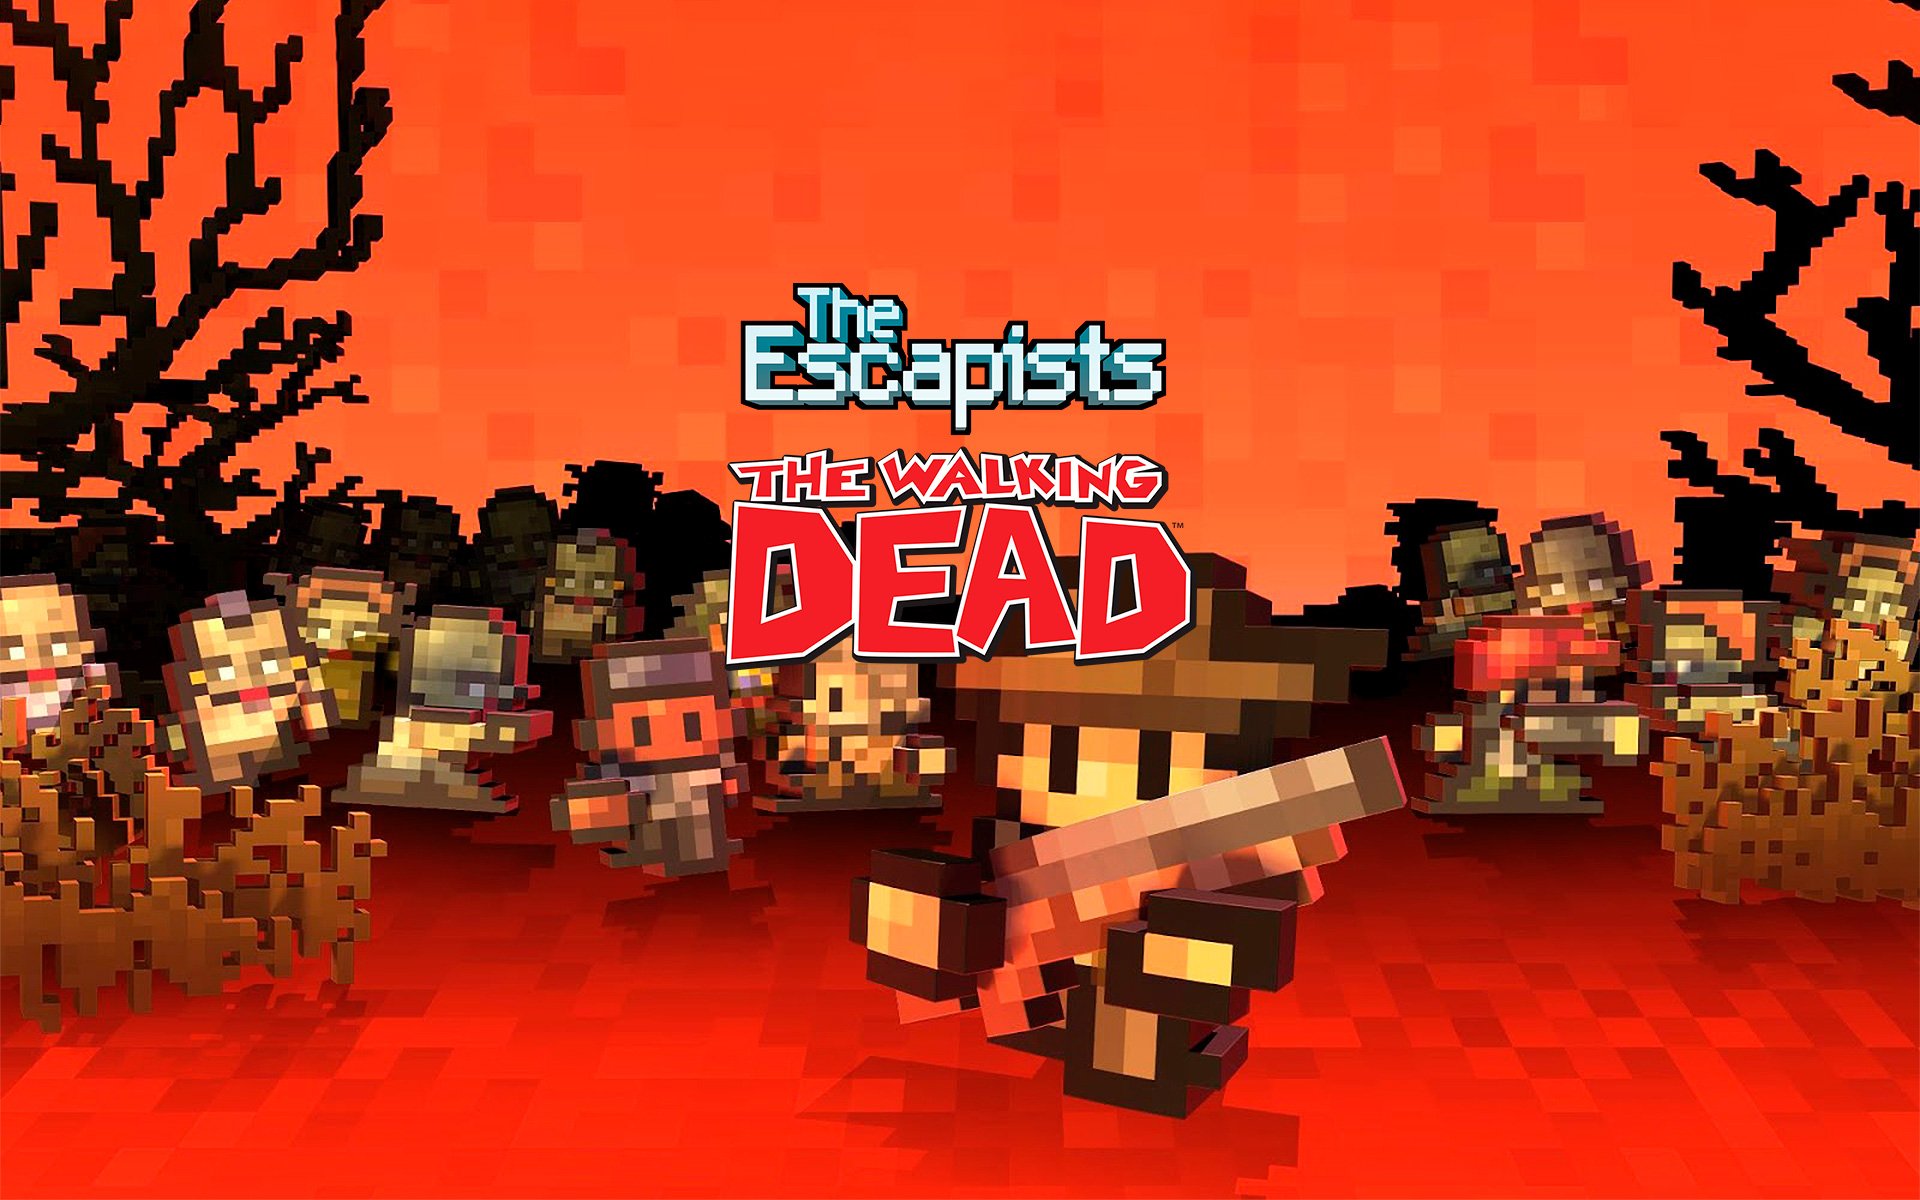 The Escapists: The Walking Dead por R$ 33.99